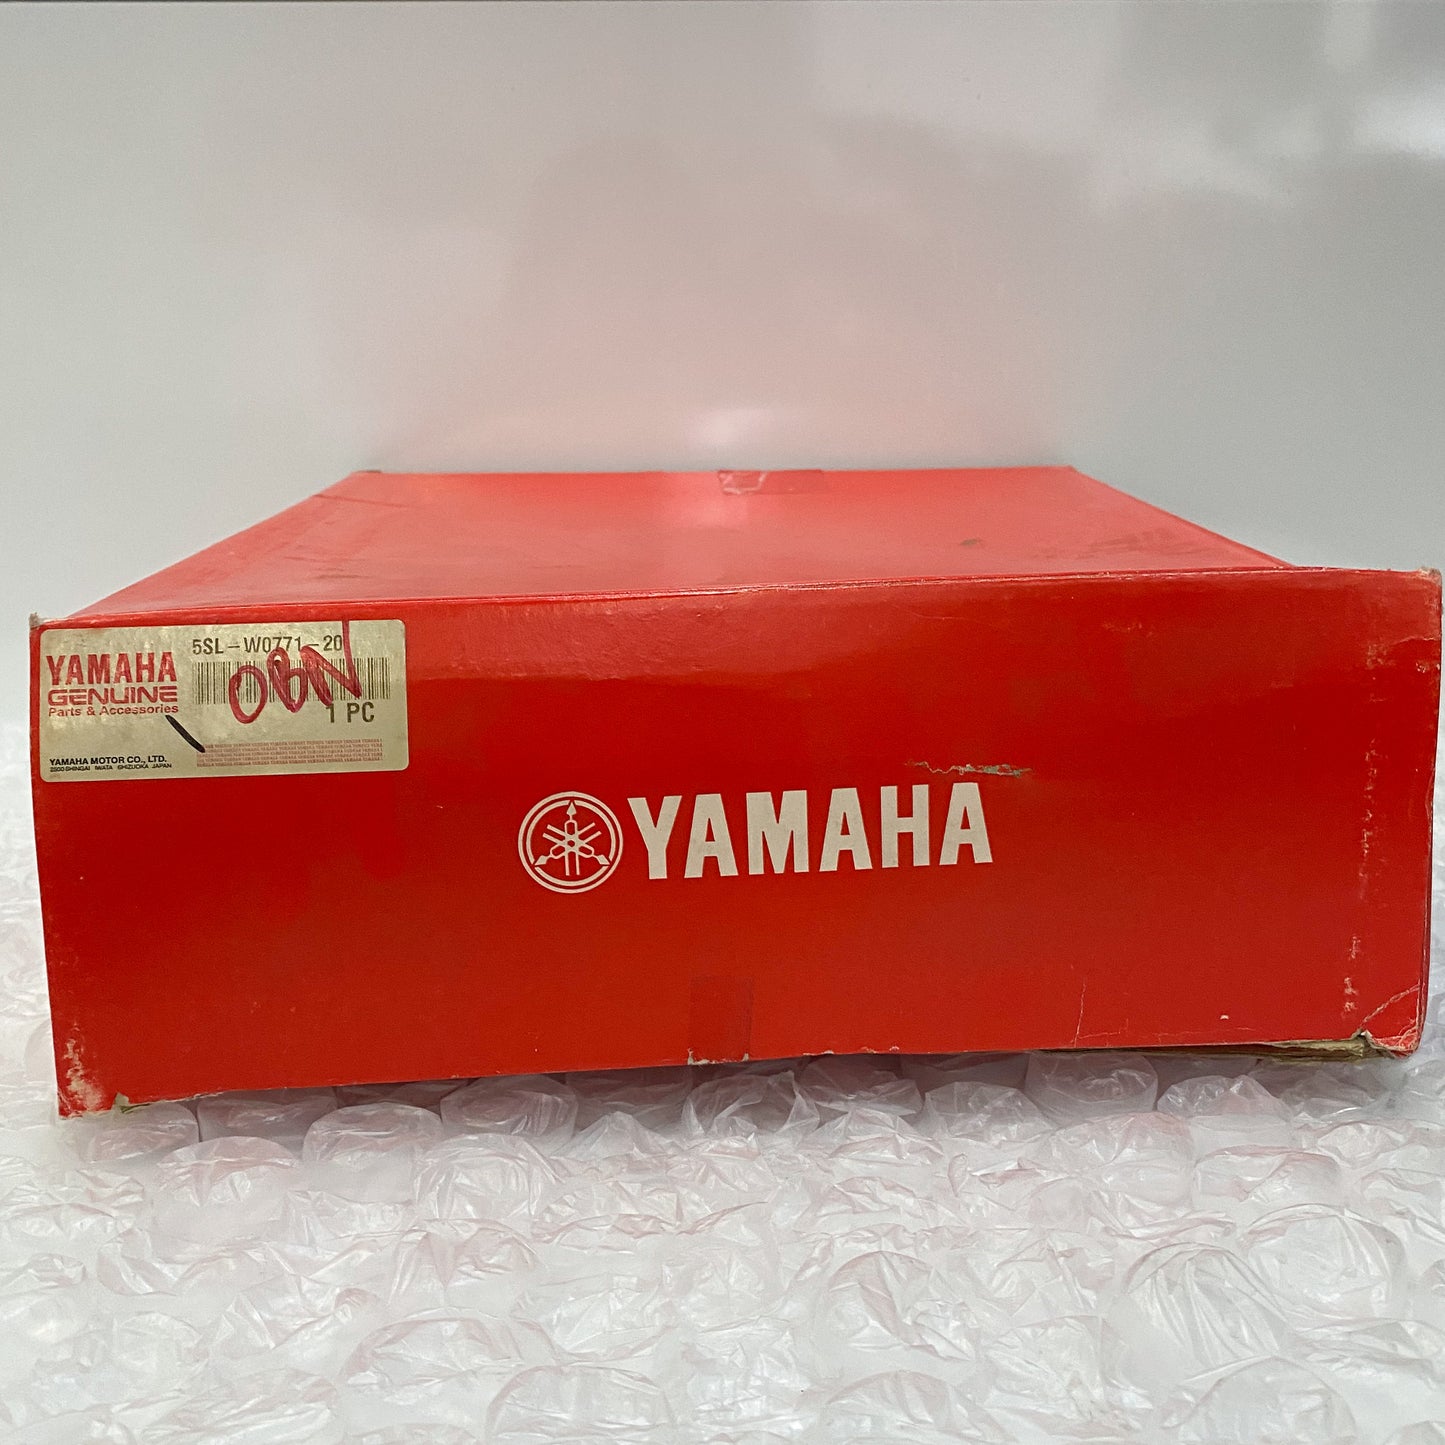 Yamaha '03 R6 Seat Cover, Silver 5SL-W0771-20